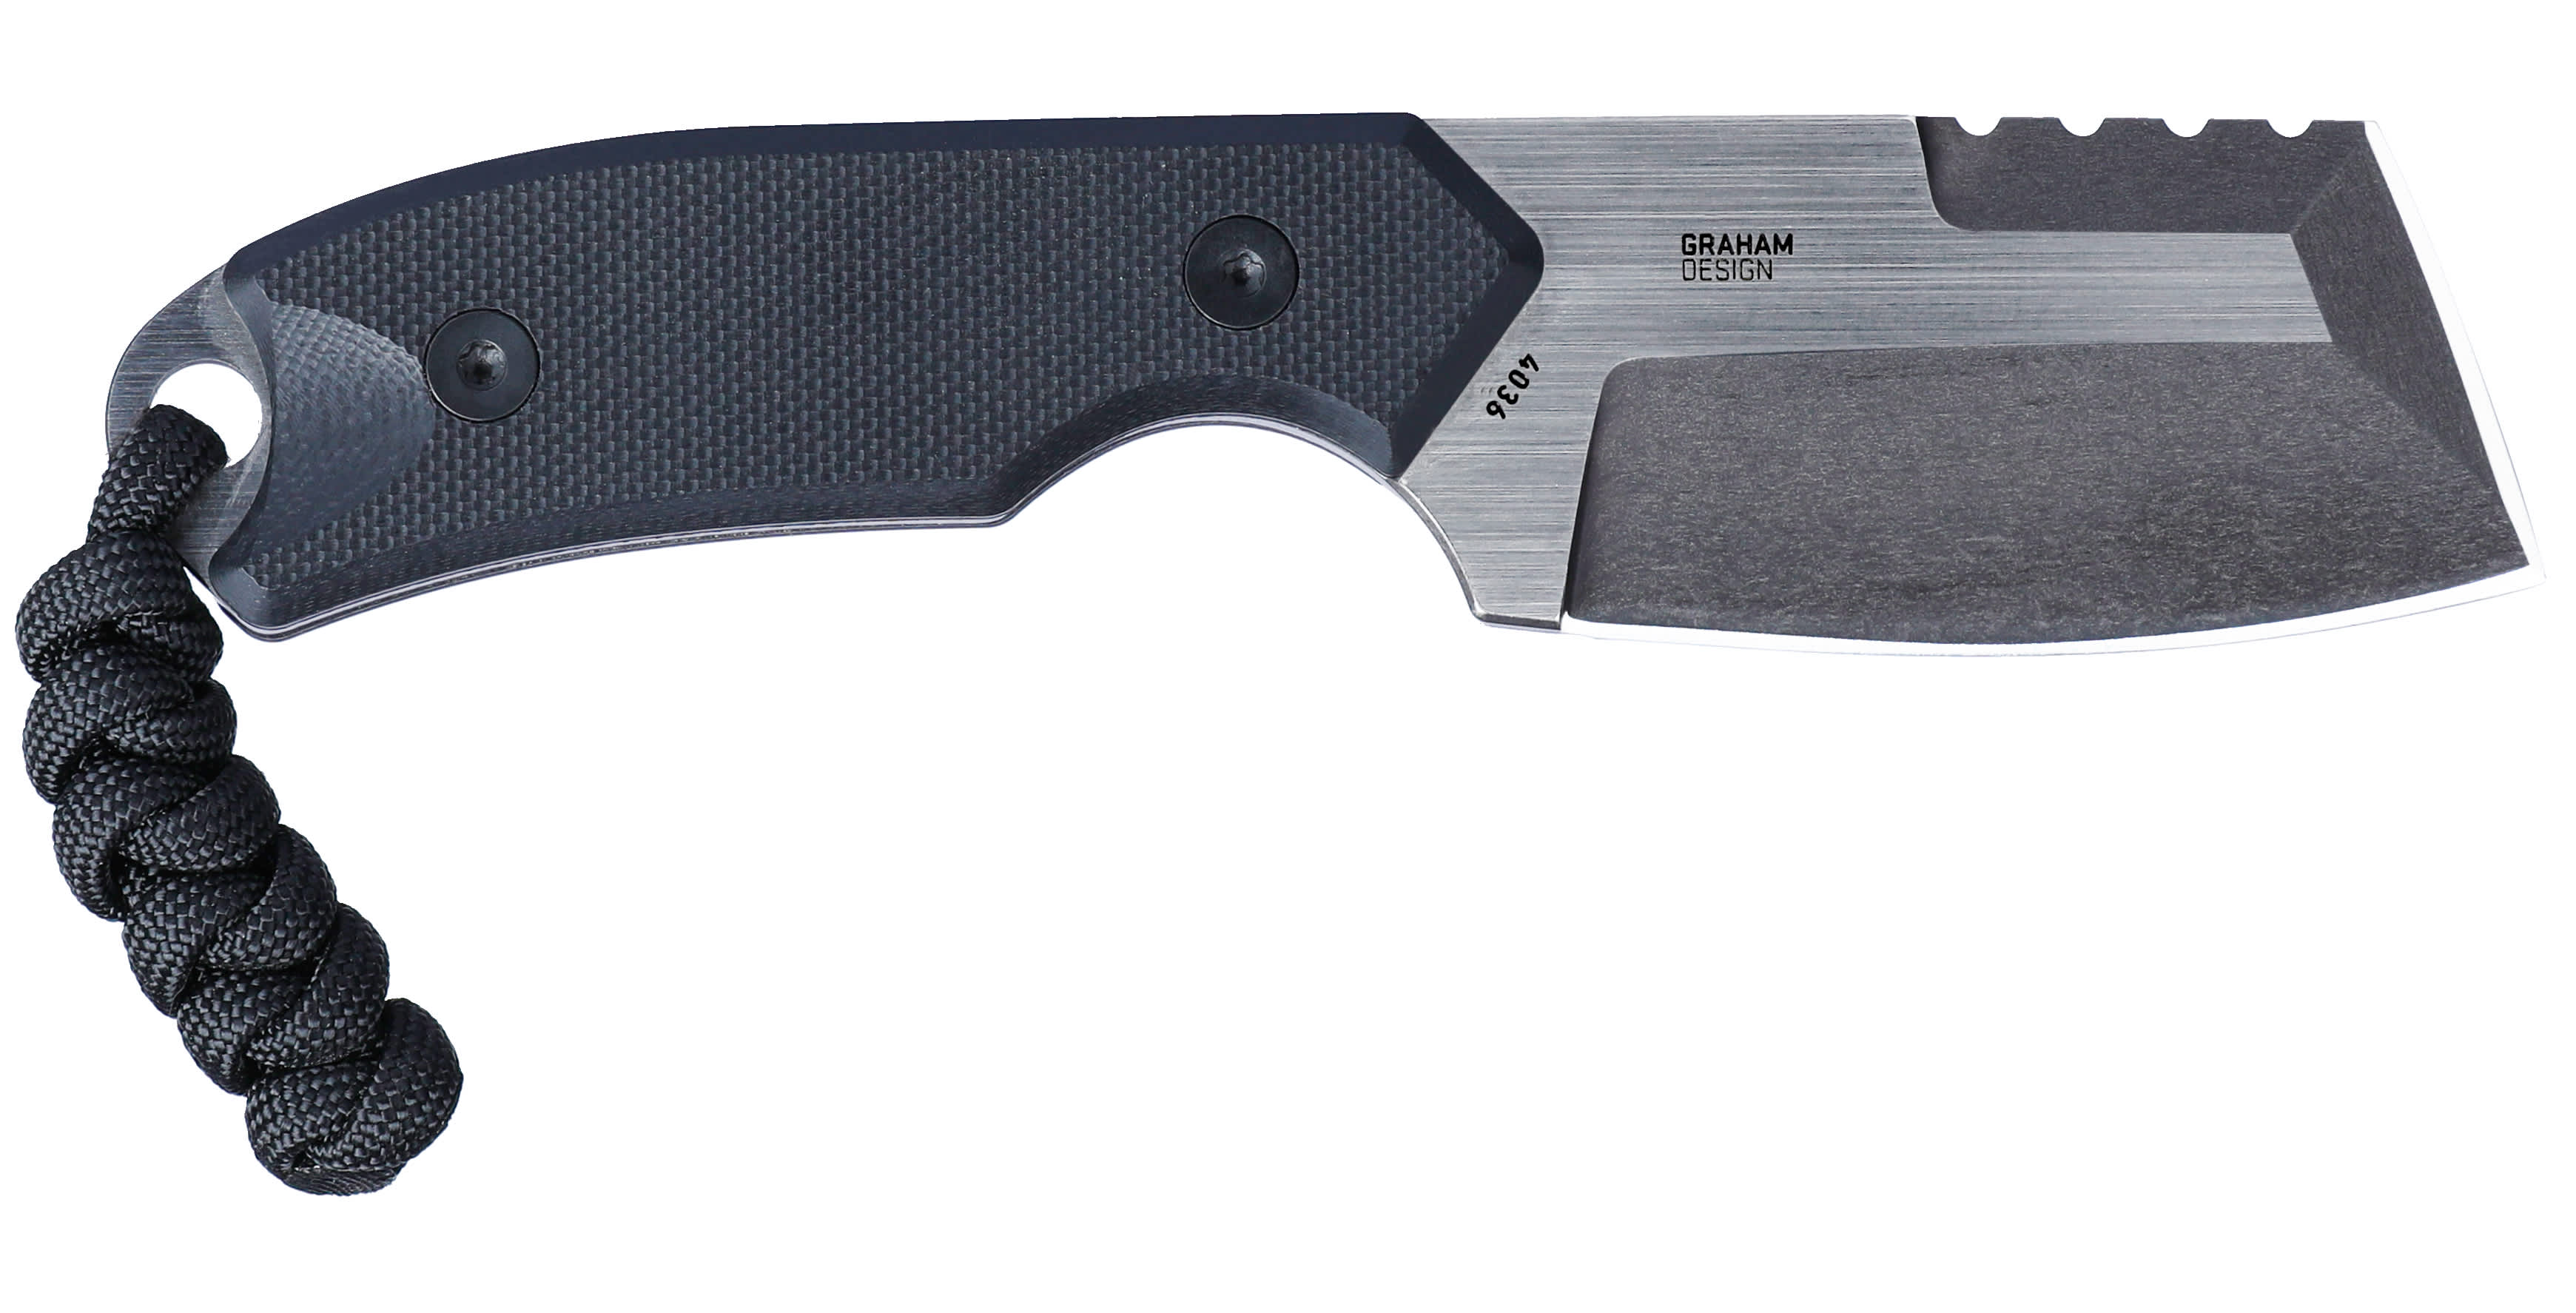 CRKT® Razel™ Compact Fixed Blade Knife